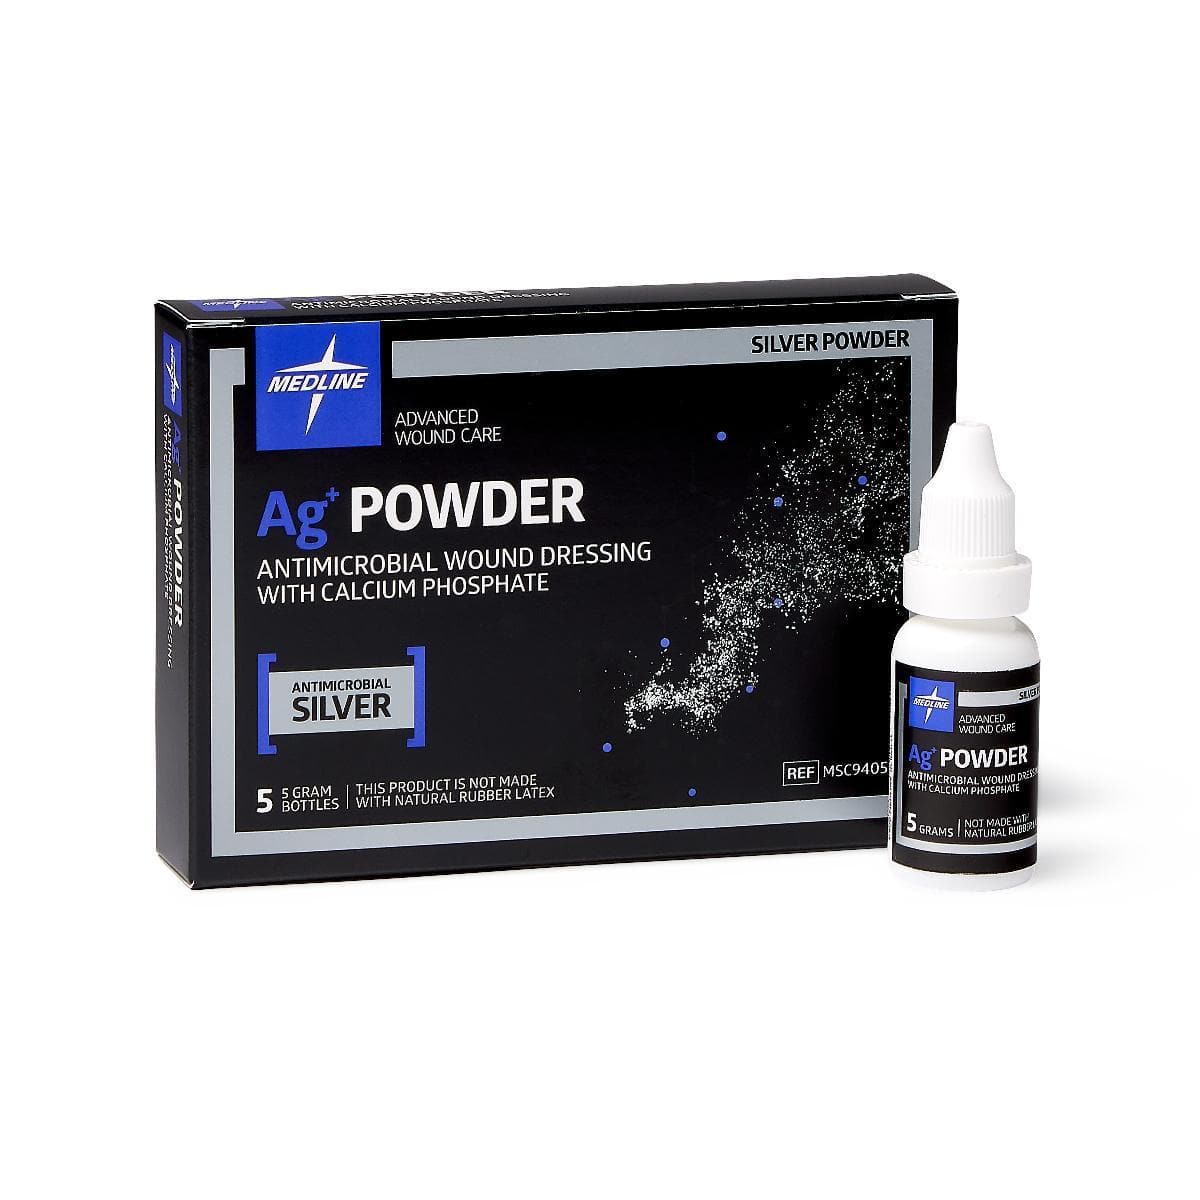 Medline Ag+ Powder Antimicrobial Wound Dressing with Calcium Phosphate - Senior.com Wound Care Powders